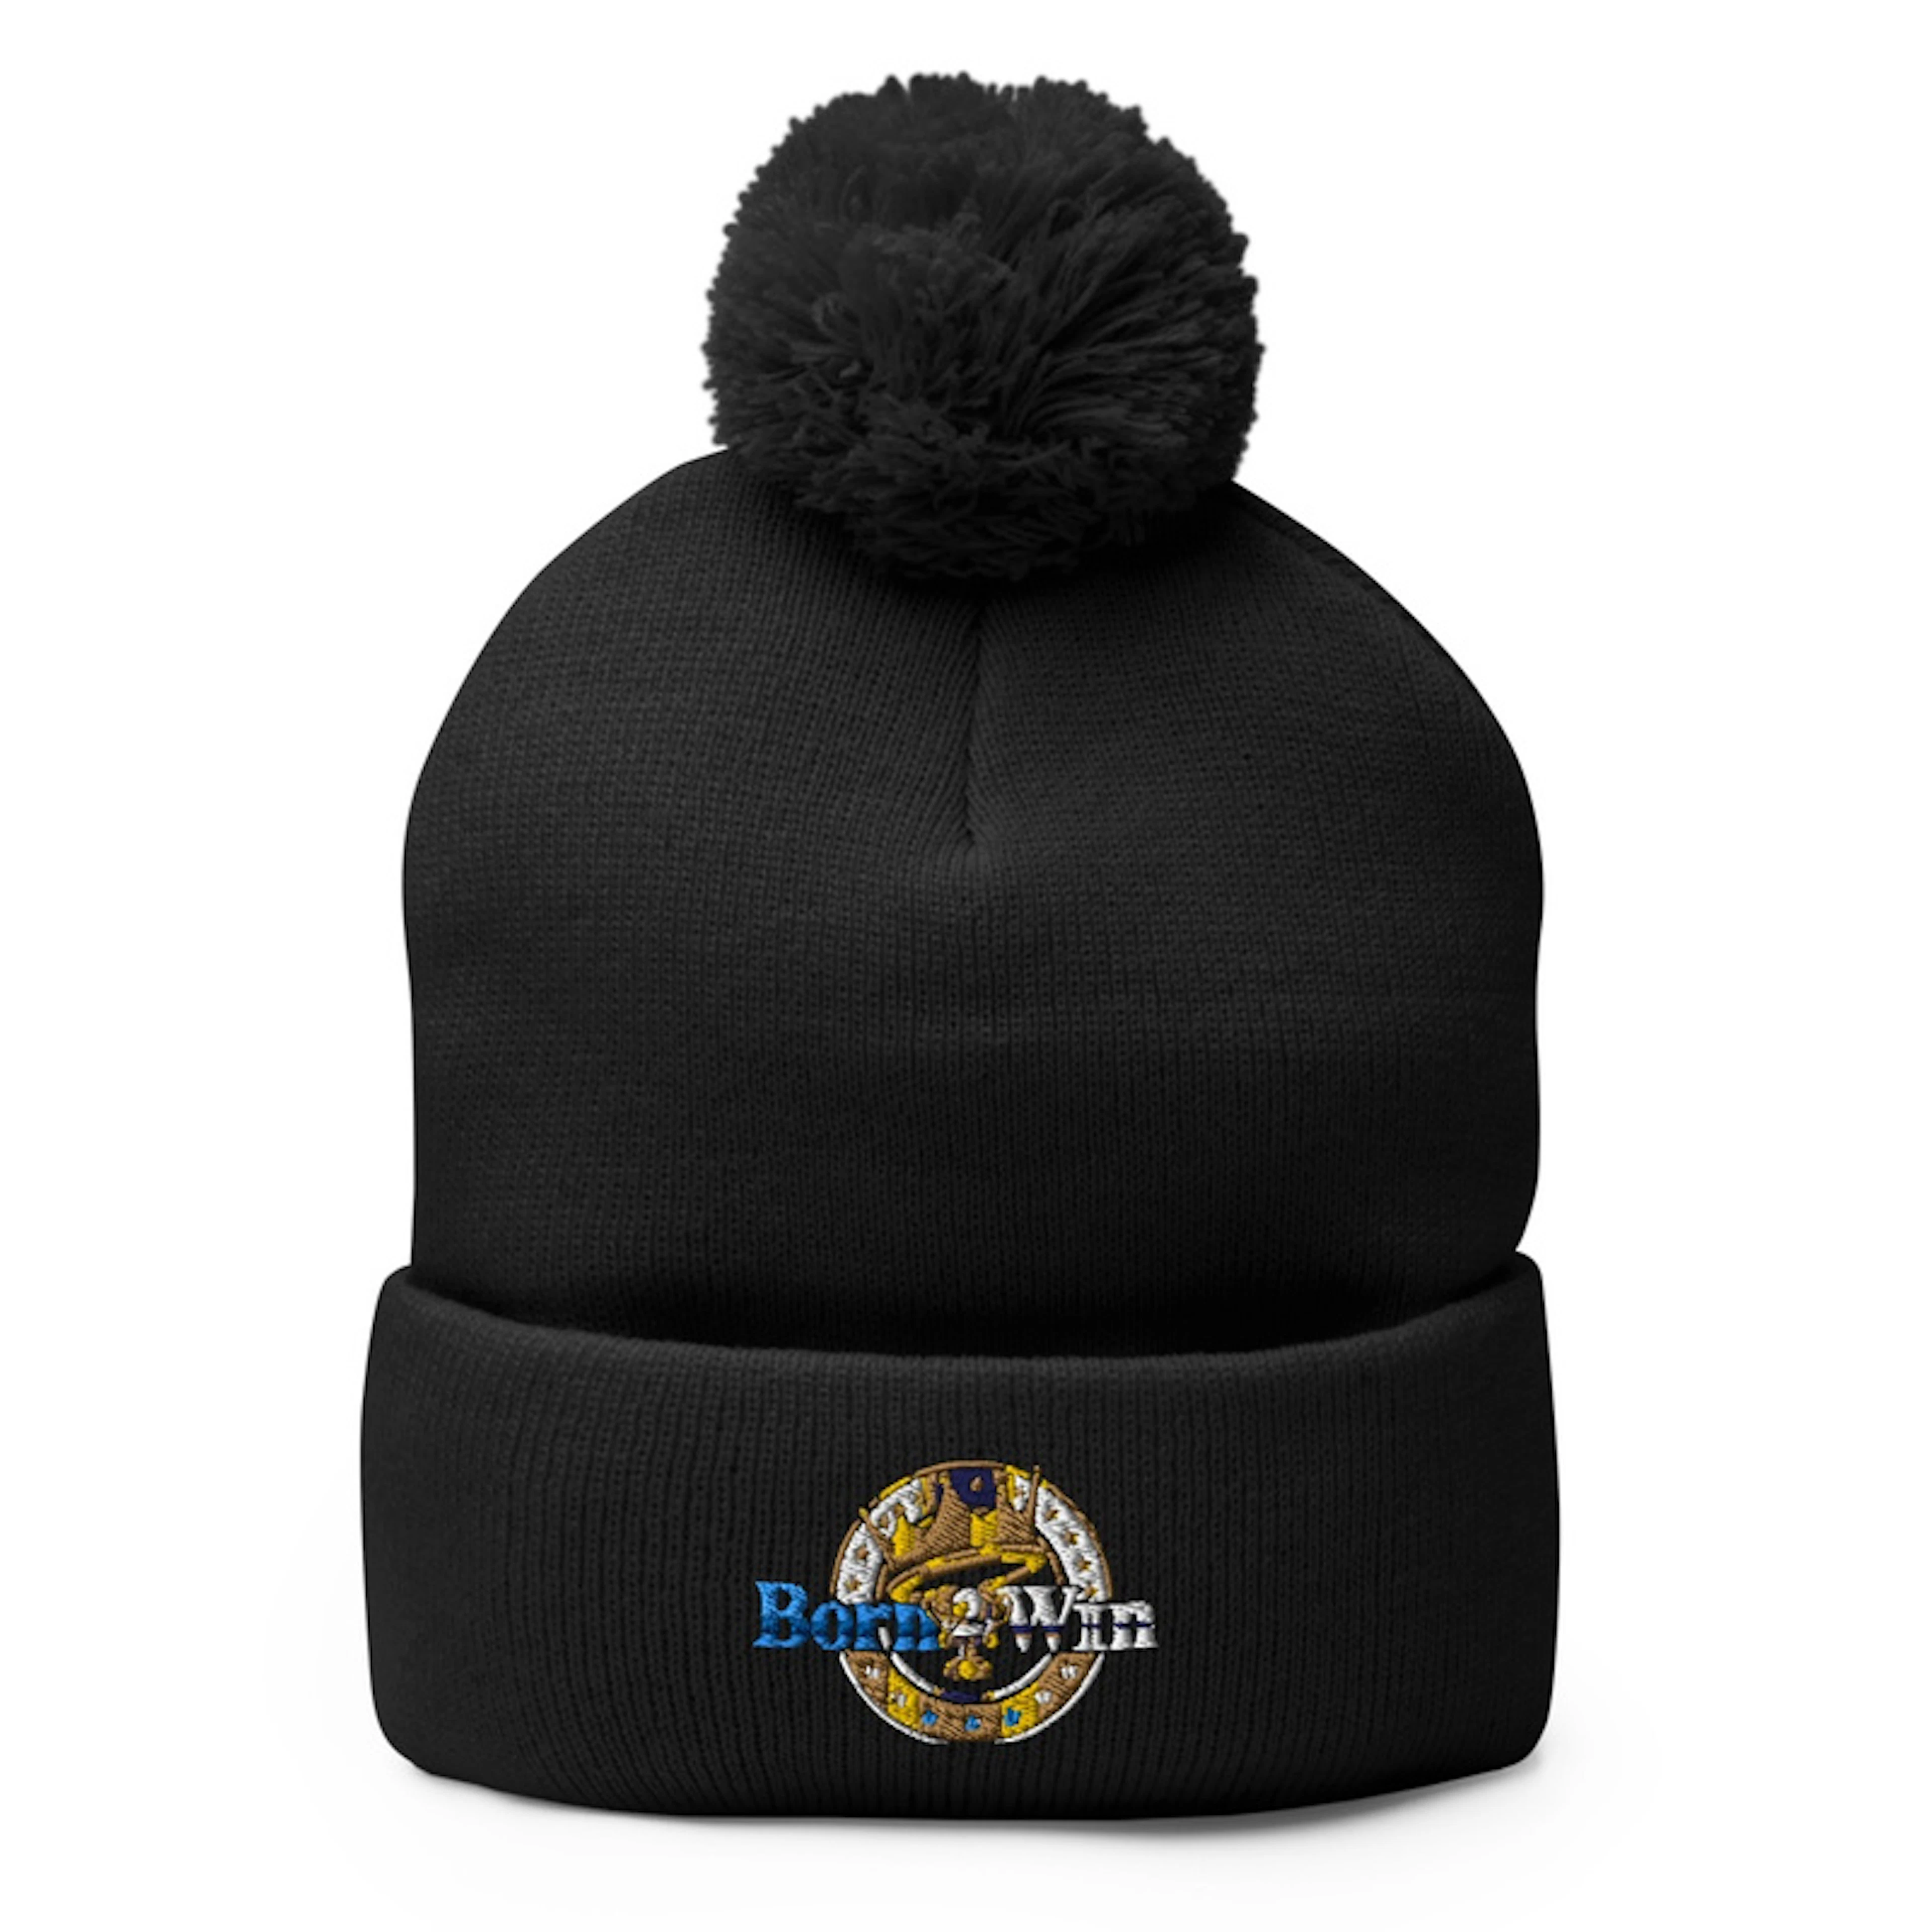 B2W Beenie Hat